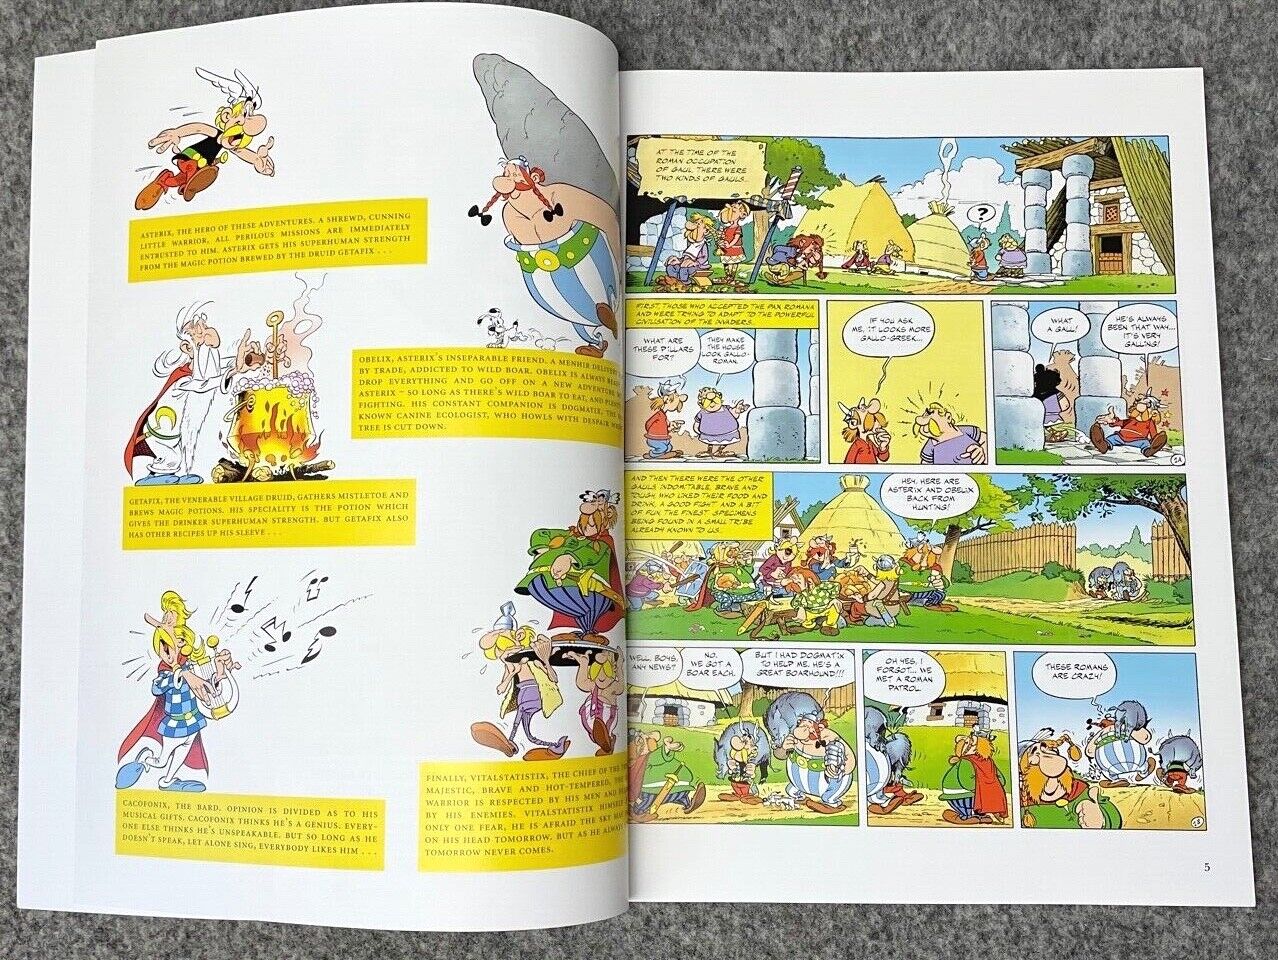 Asterix & Big Fight - 2000s Orion/Sphere UK Edition Paperback Book EO Uderzo